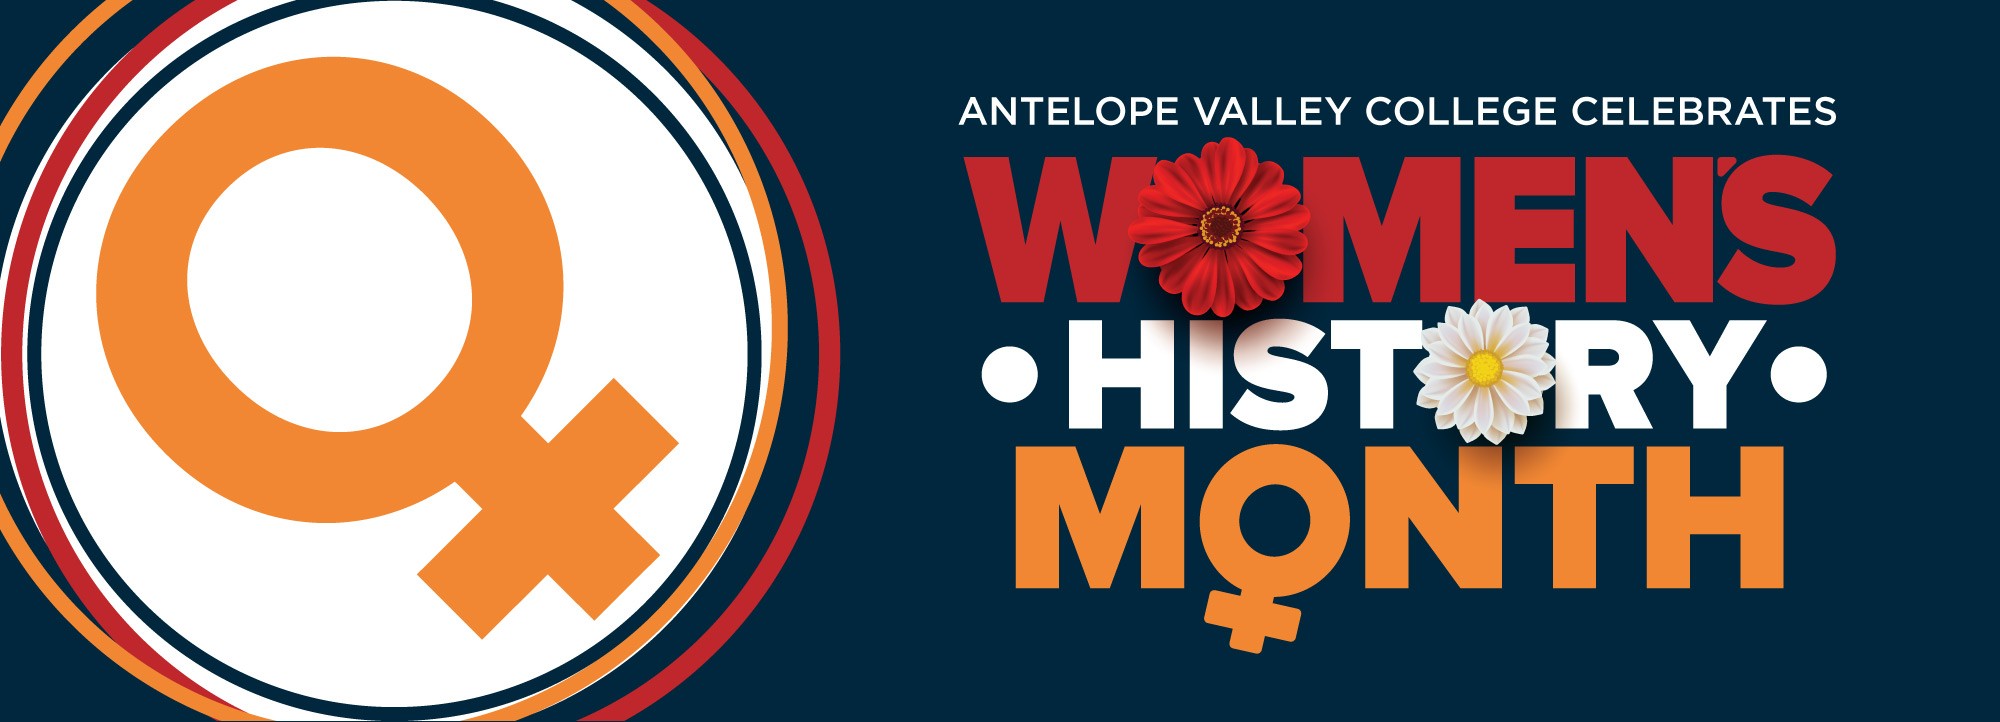 AVC Celebrates Women's History Month